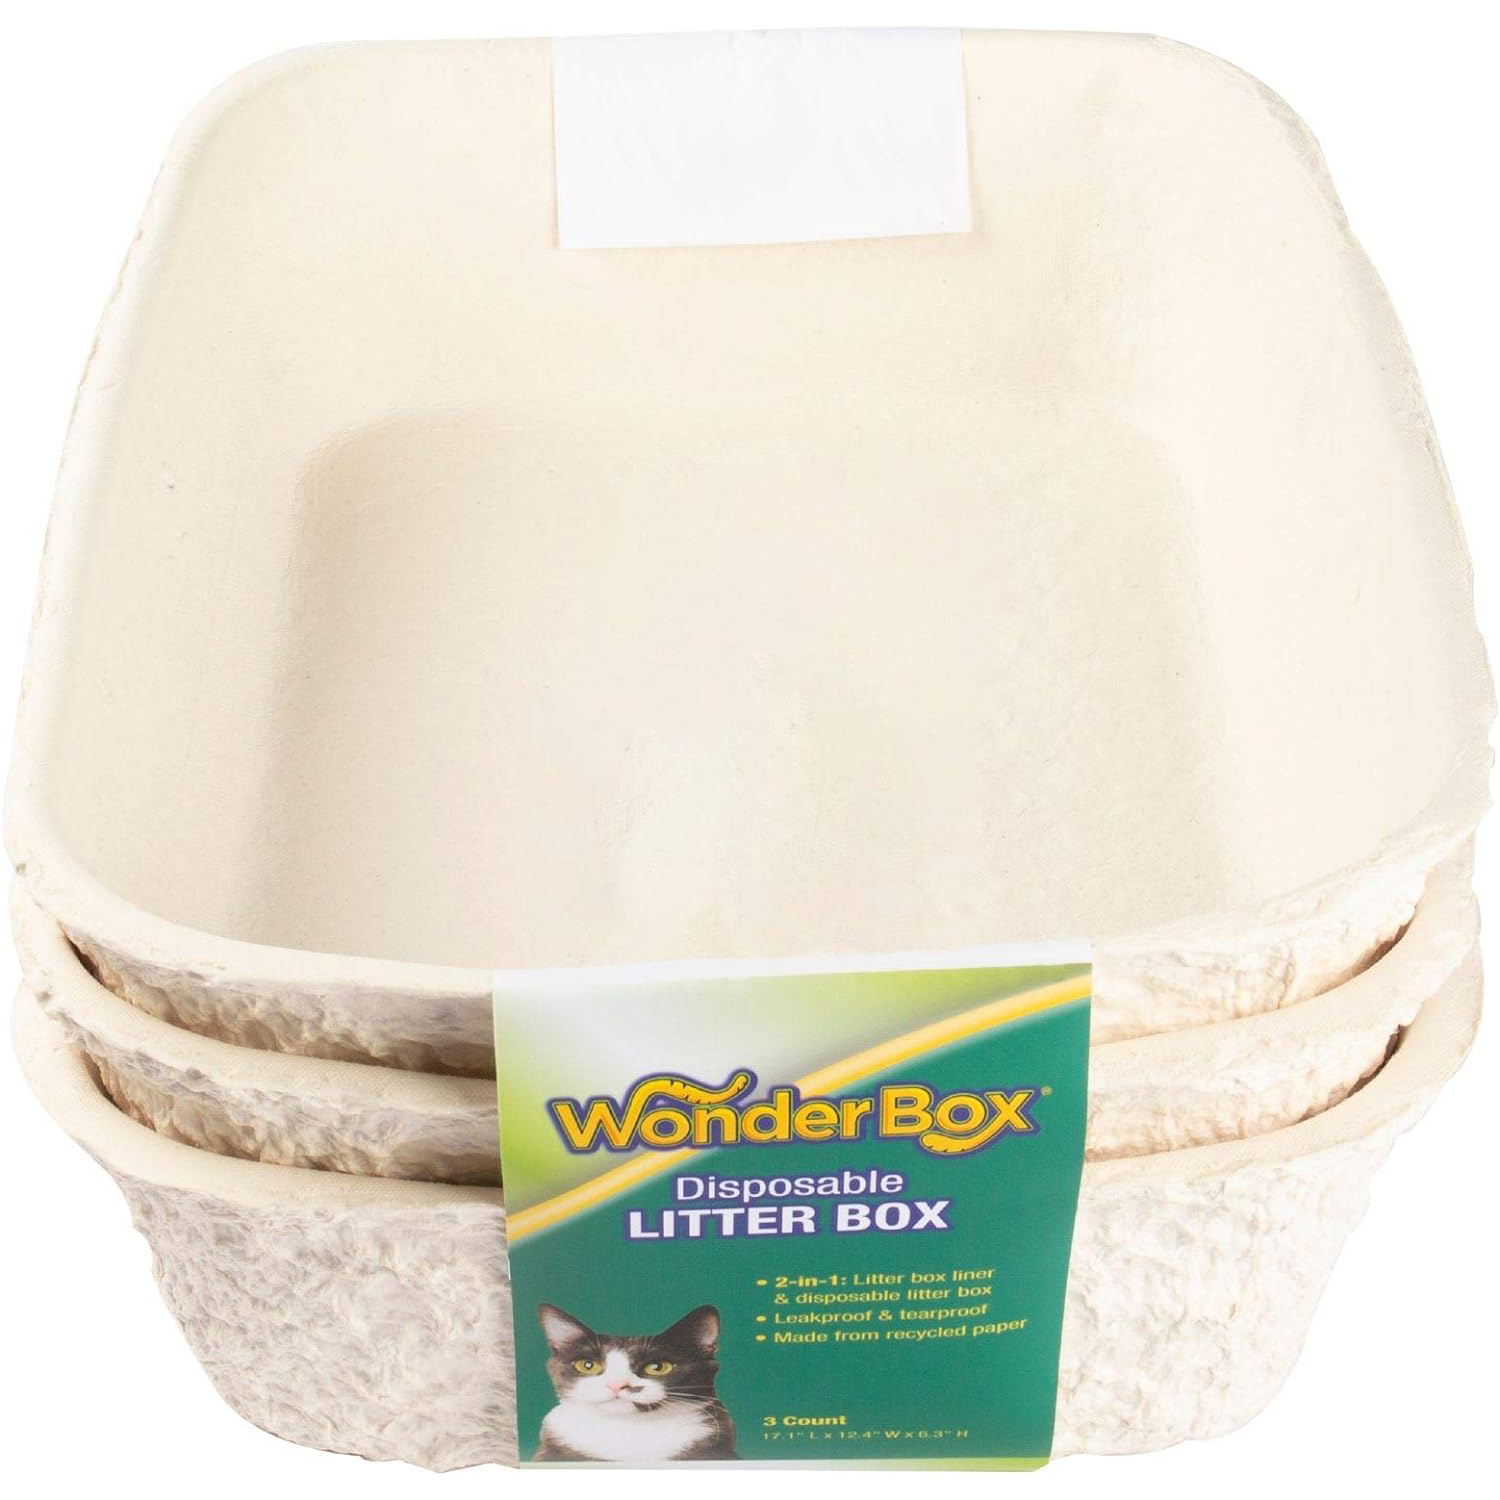 Kitty's Wonderbox Disposable Litter Box